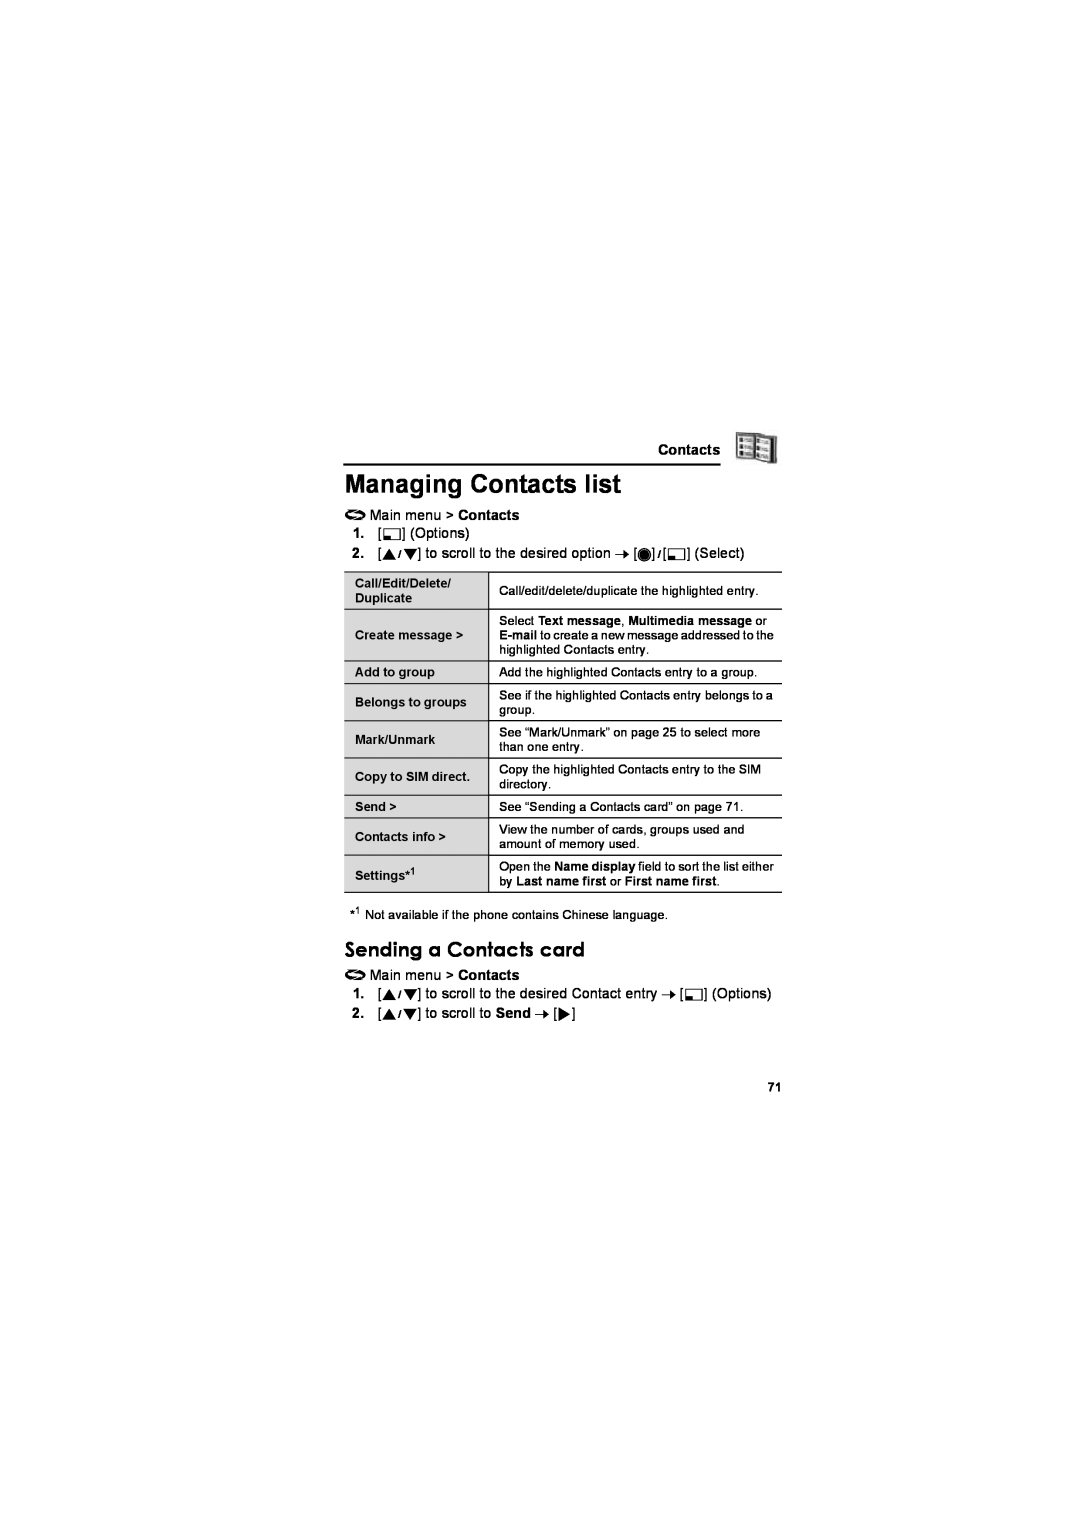 Panasonic EB-X800 manual Managing Contacts list, Sending a Contacts card 